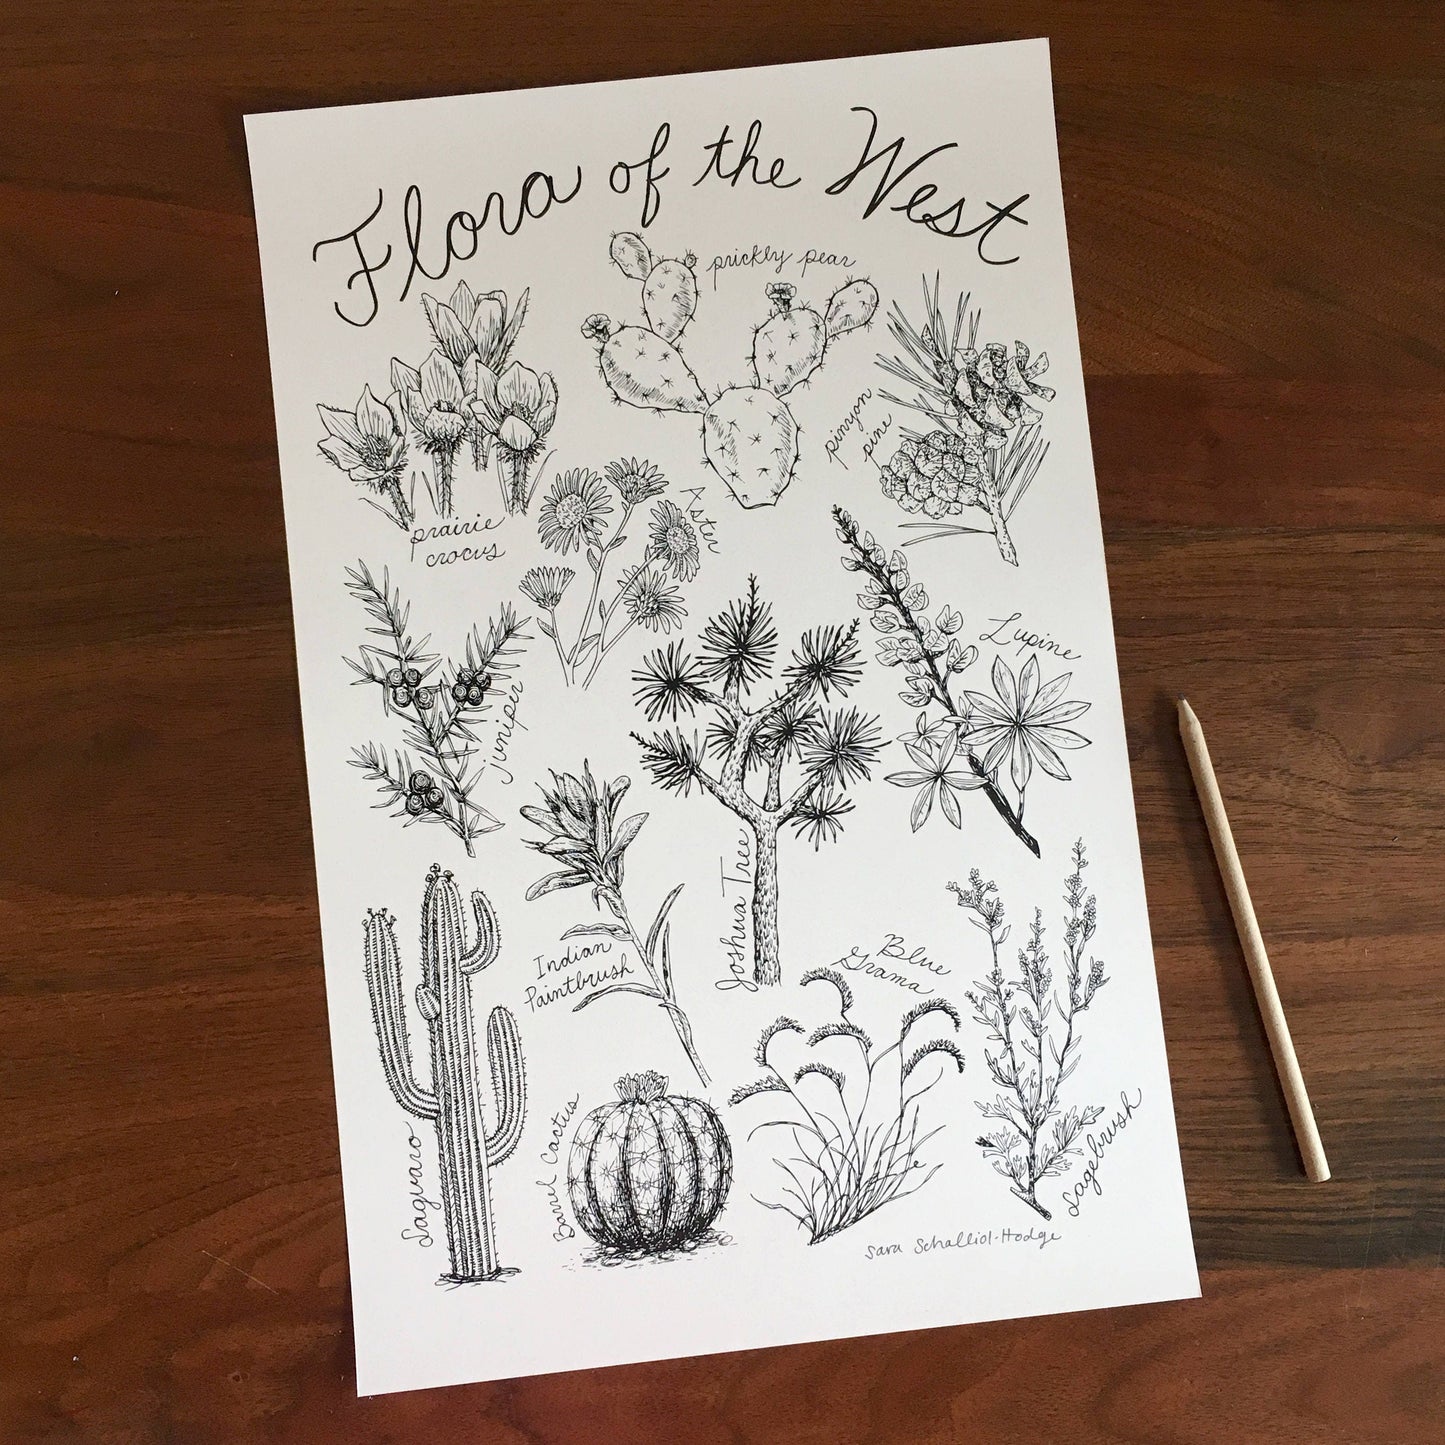 art print | flora of the west